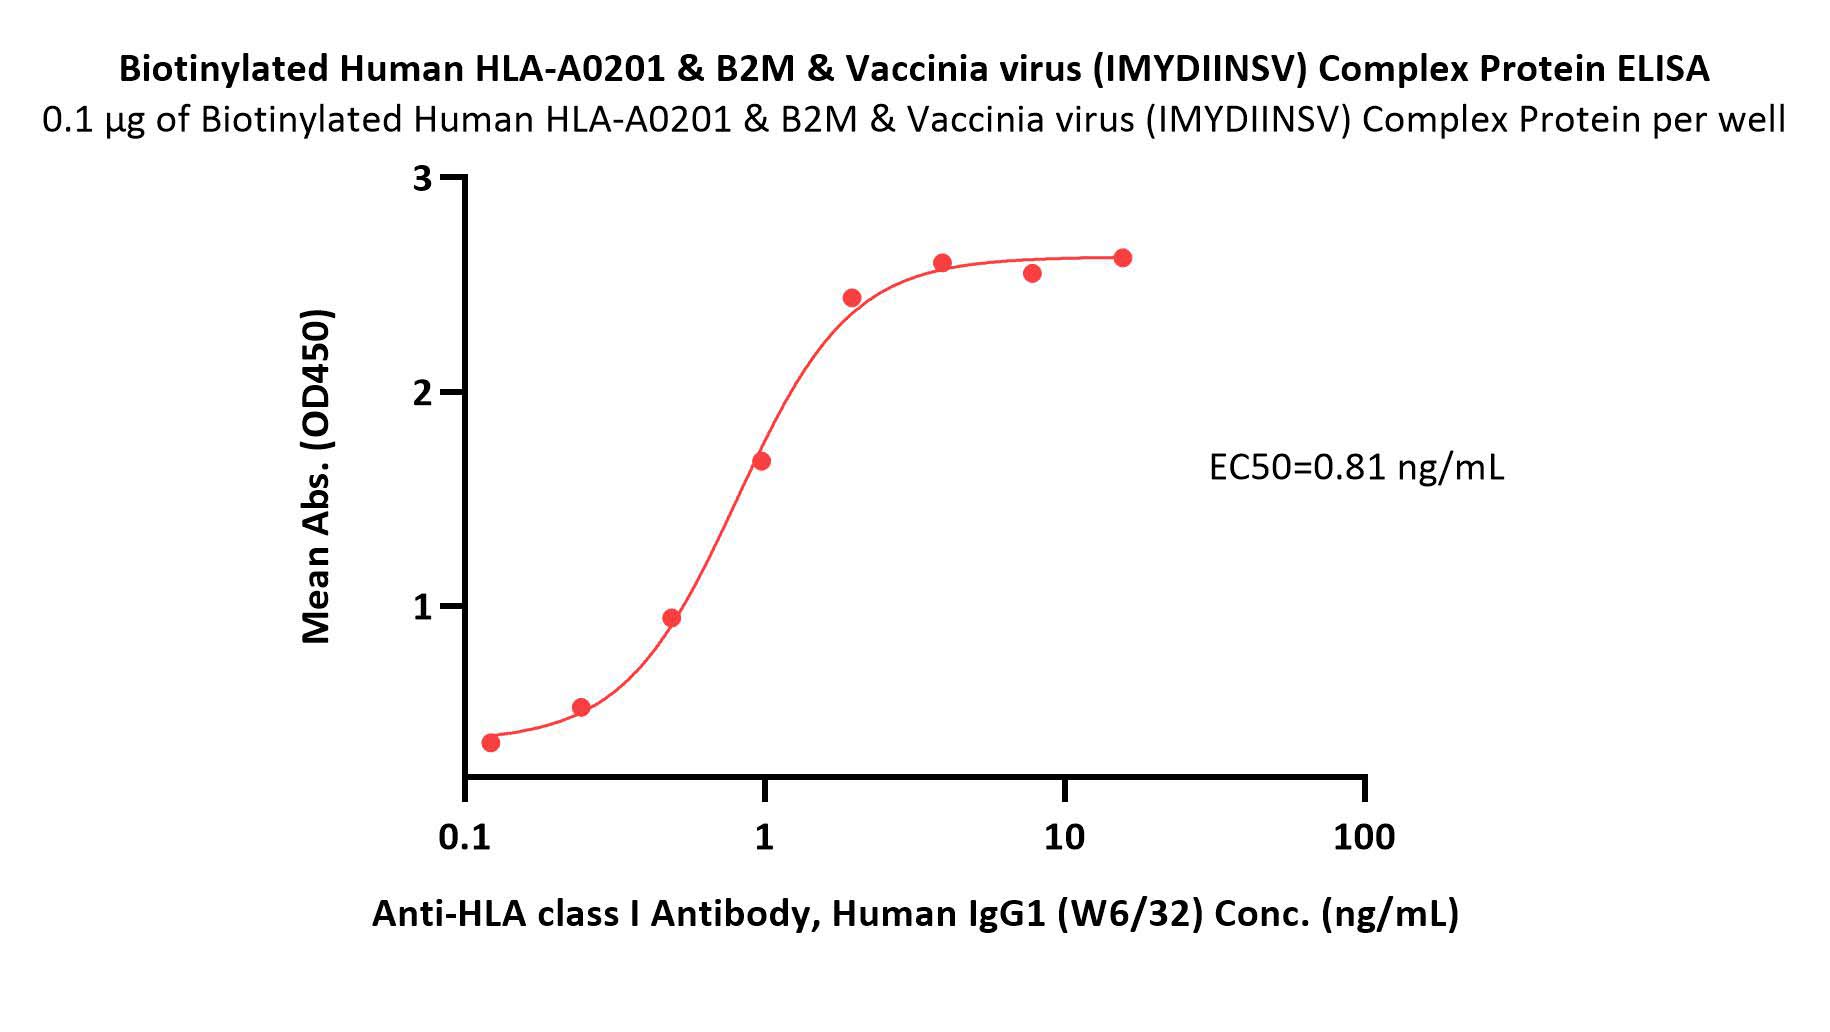 HLA-A*0201 & B2M & Vaccinia virus (IMYDIINSV) ELISA